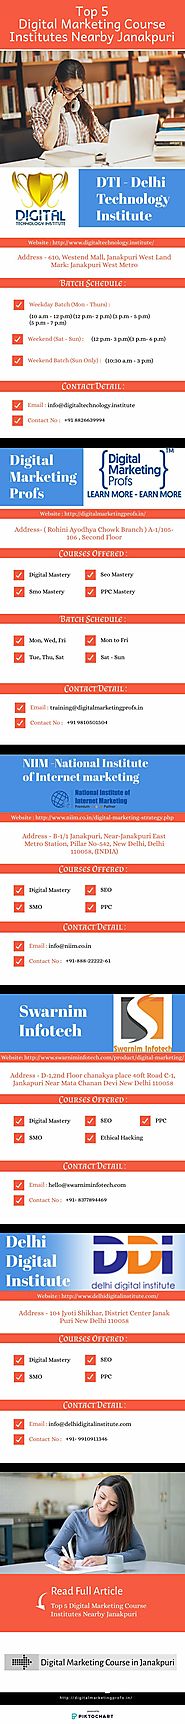 Top 5 Digital Marketing Course Institutes in Janakpuri | Infographic